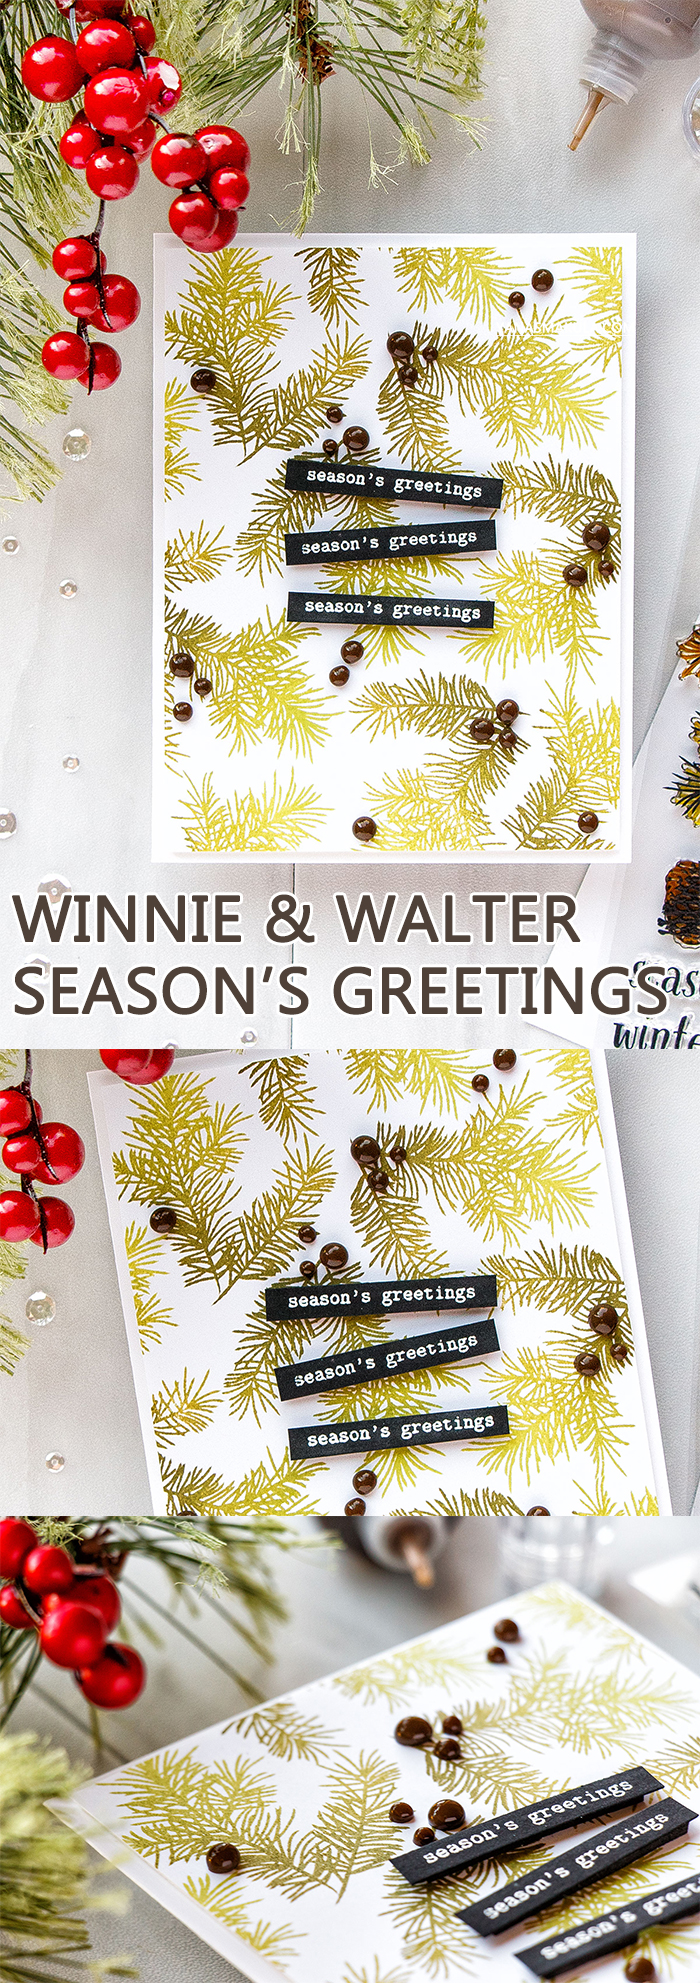 Winnie & Walter | Season's Greetings Card. World Cardmaking Day 2017 Blog Hop